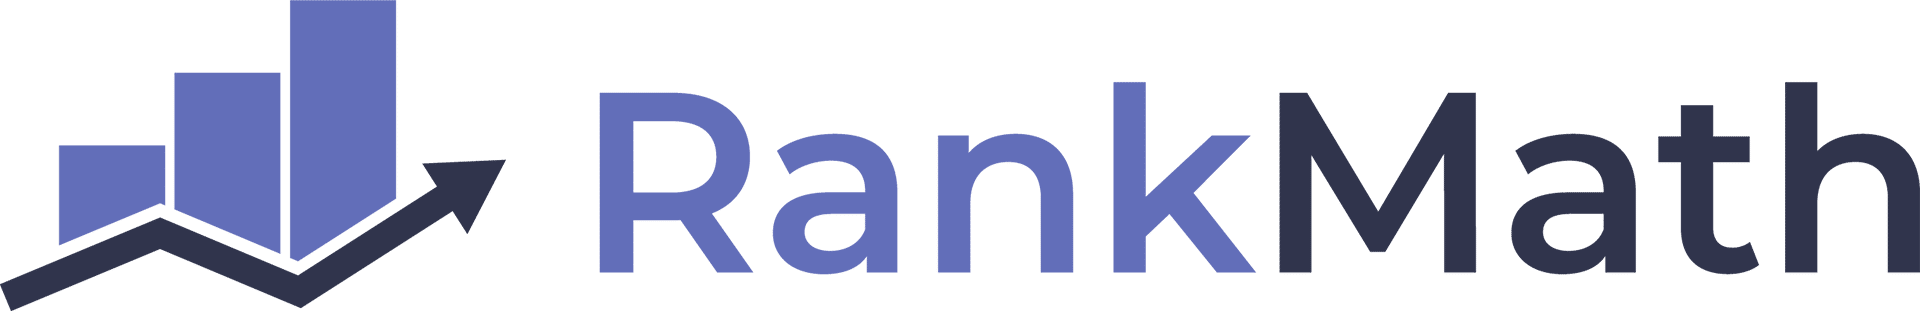 rank math logo large 1